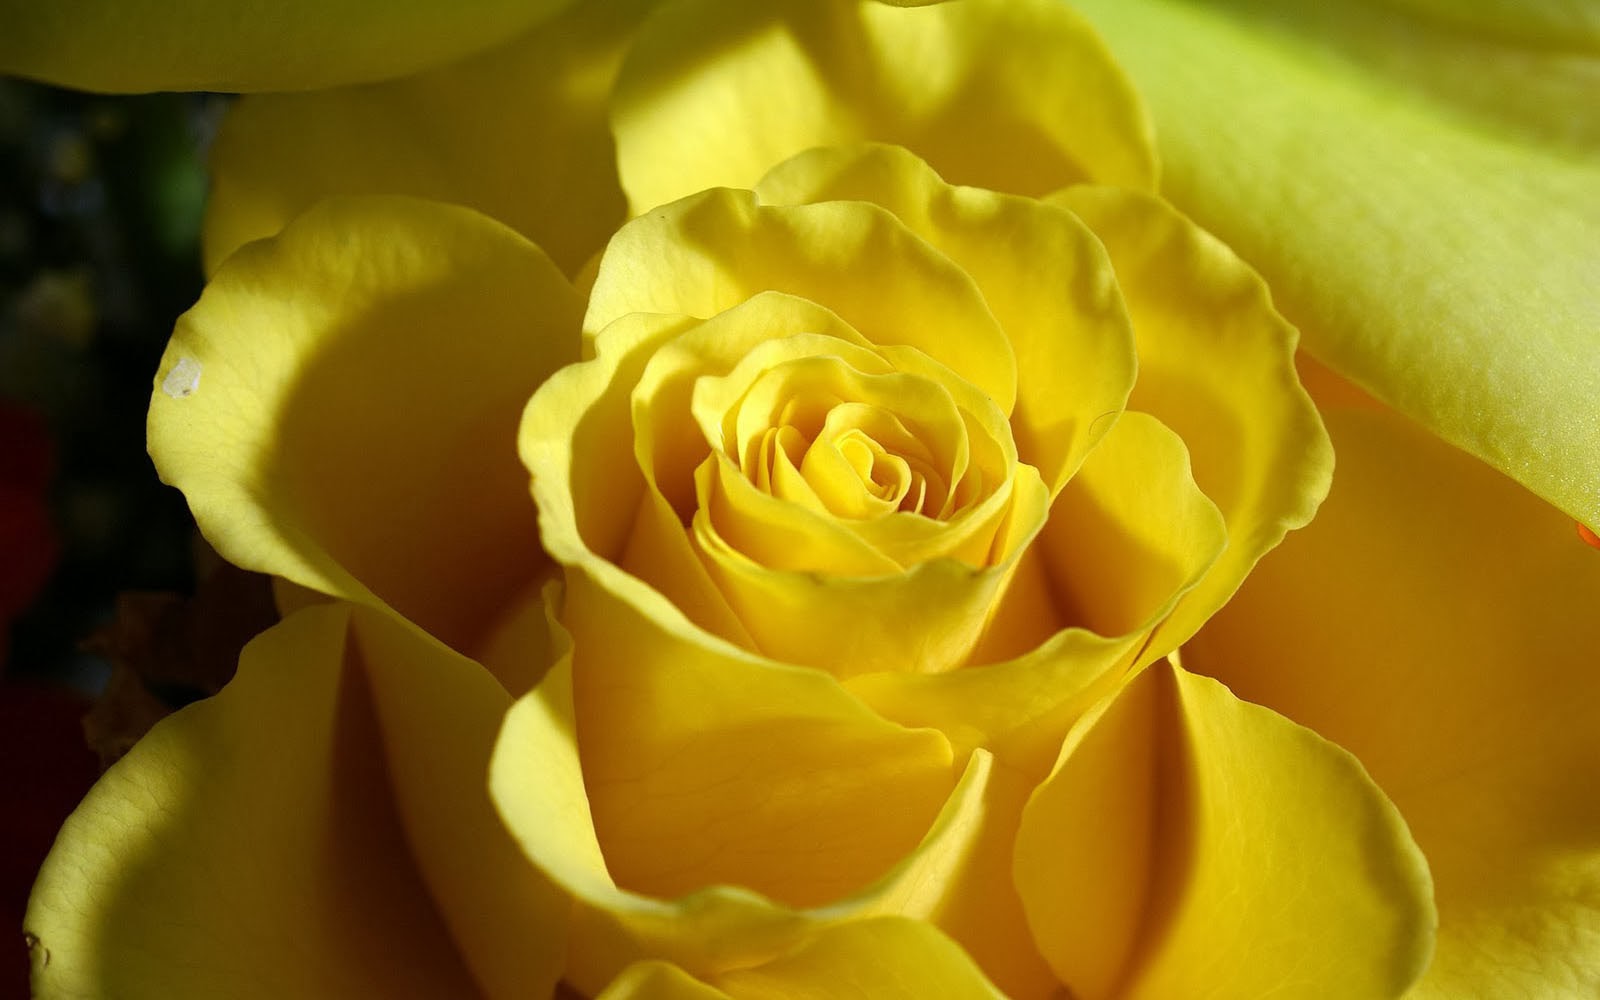  Yellow Rose Wallpapers Yellow Rose DesktopWallpapers Yellow Rose